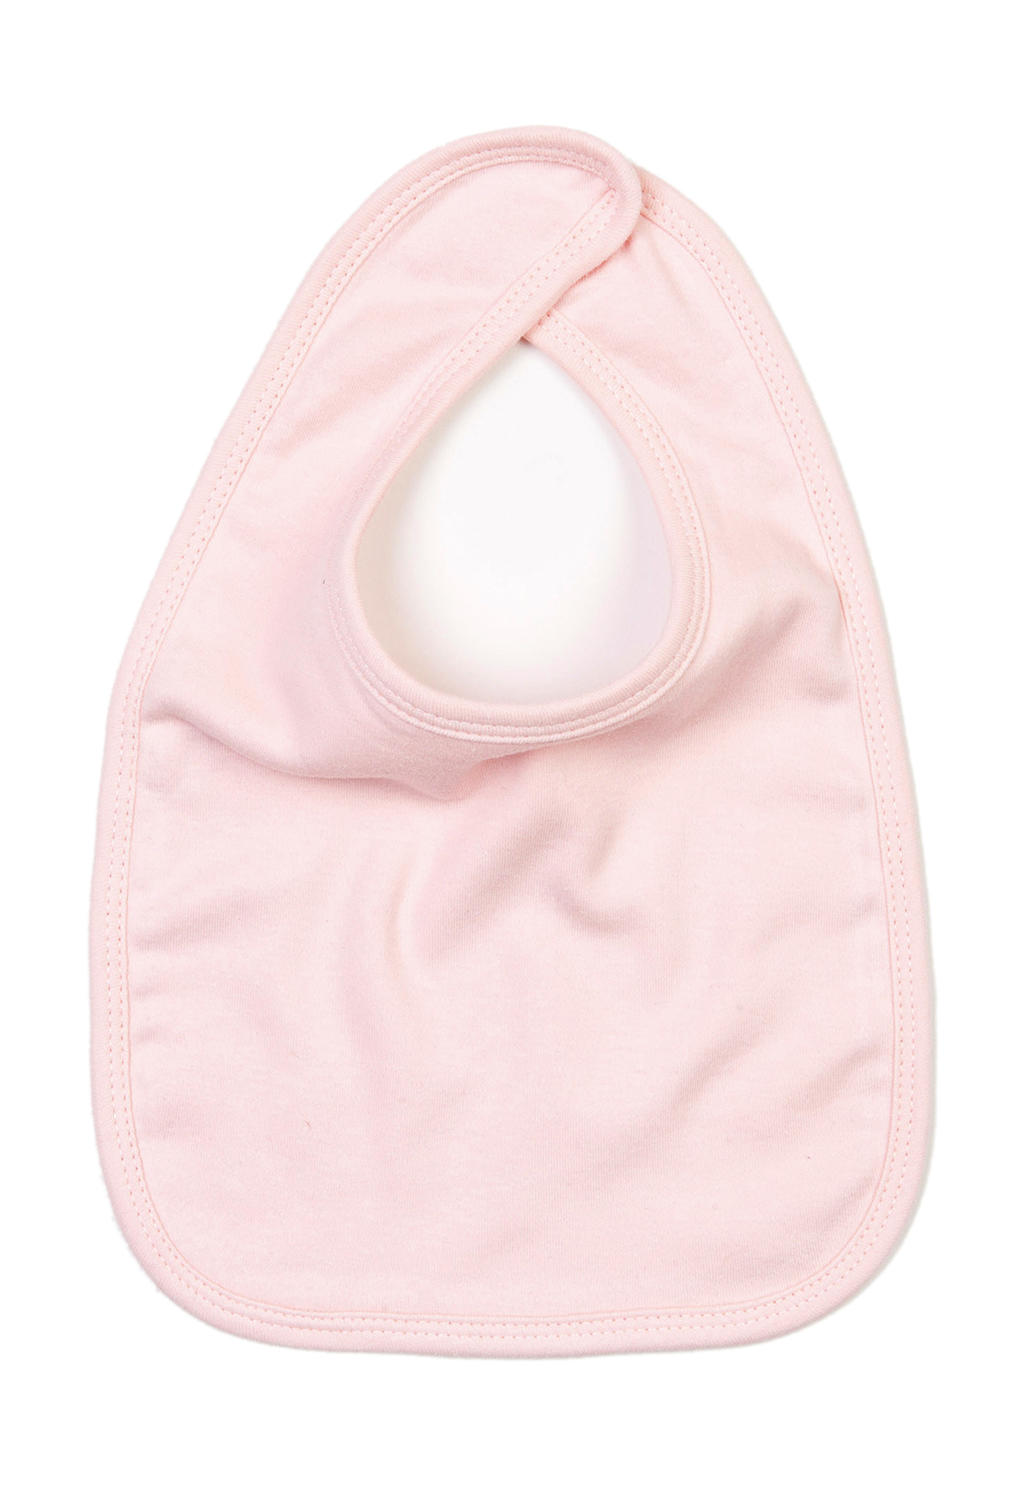  Baby Bib in Farbe Powder Pink